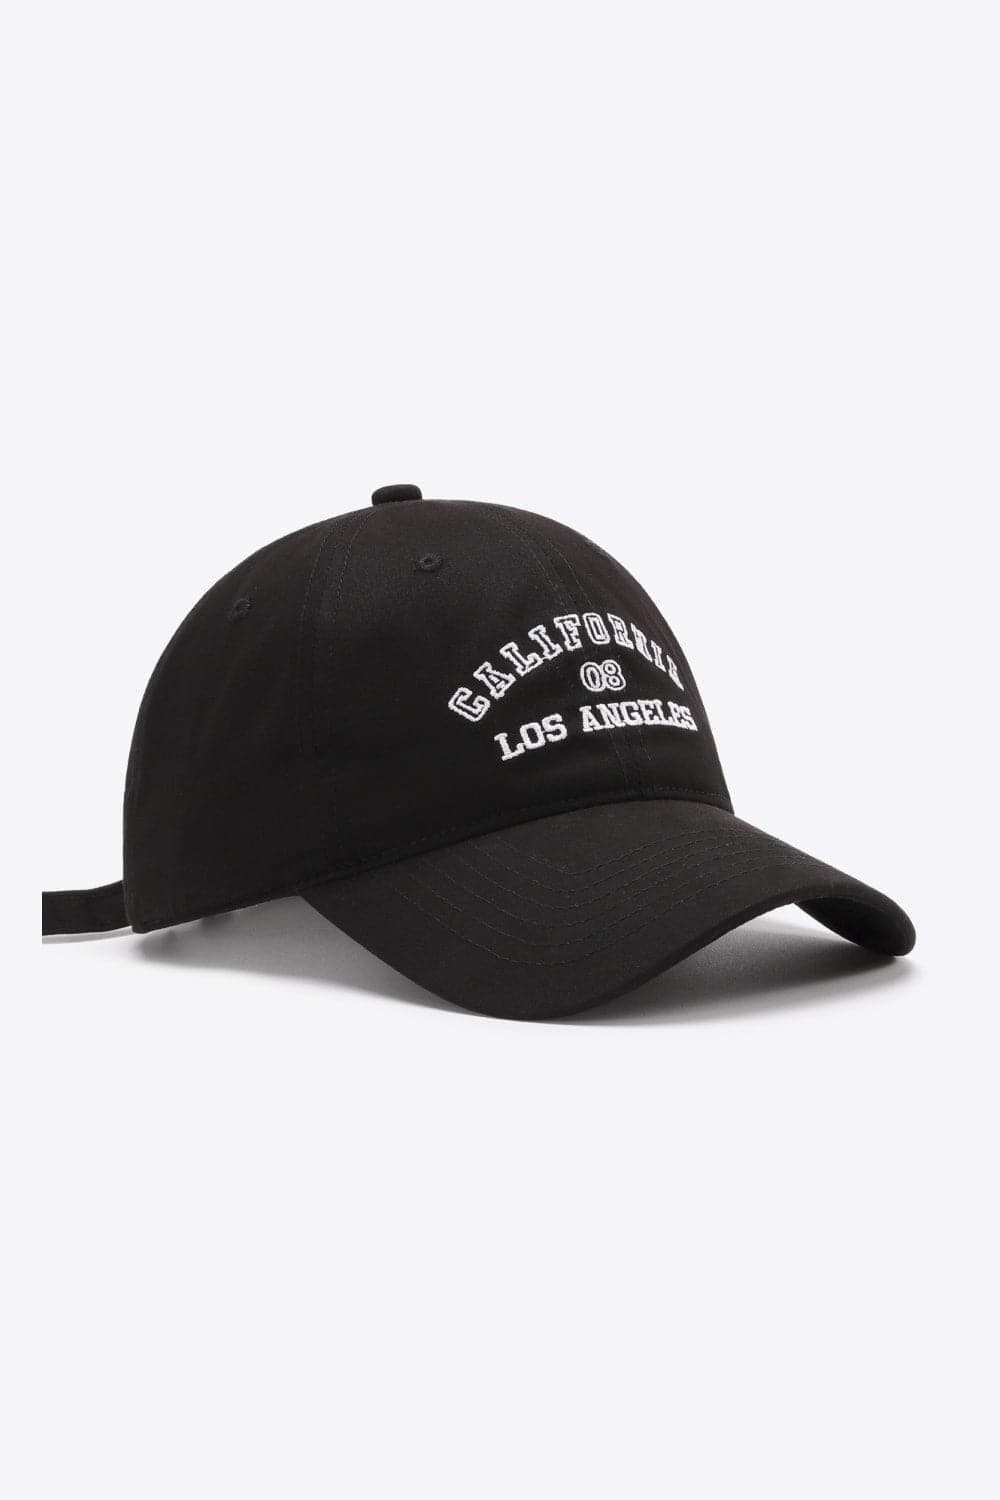 CALIFORNIA LOS ANGELES Adjustable Baseball Cap, Multiple Colors - SwagglyLife Home & Fashion